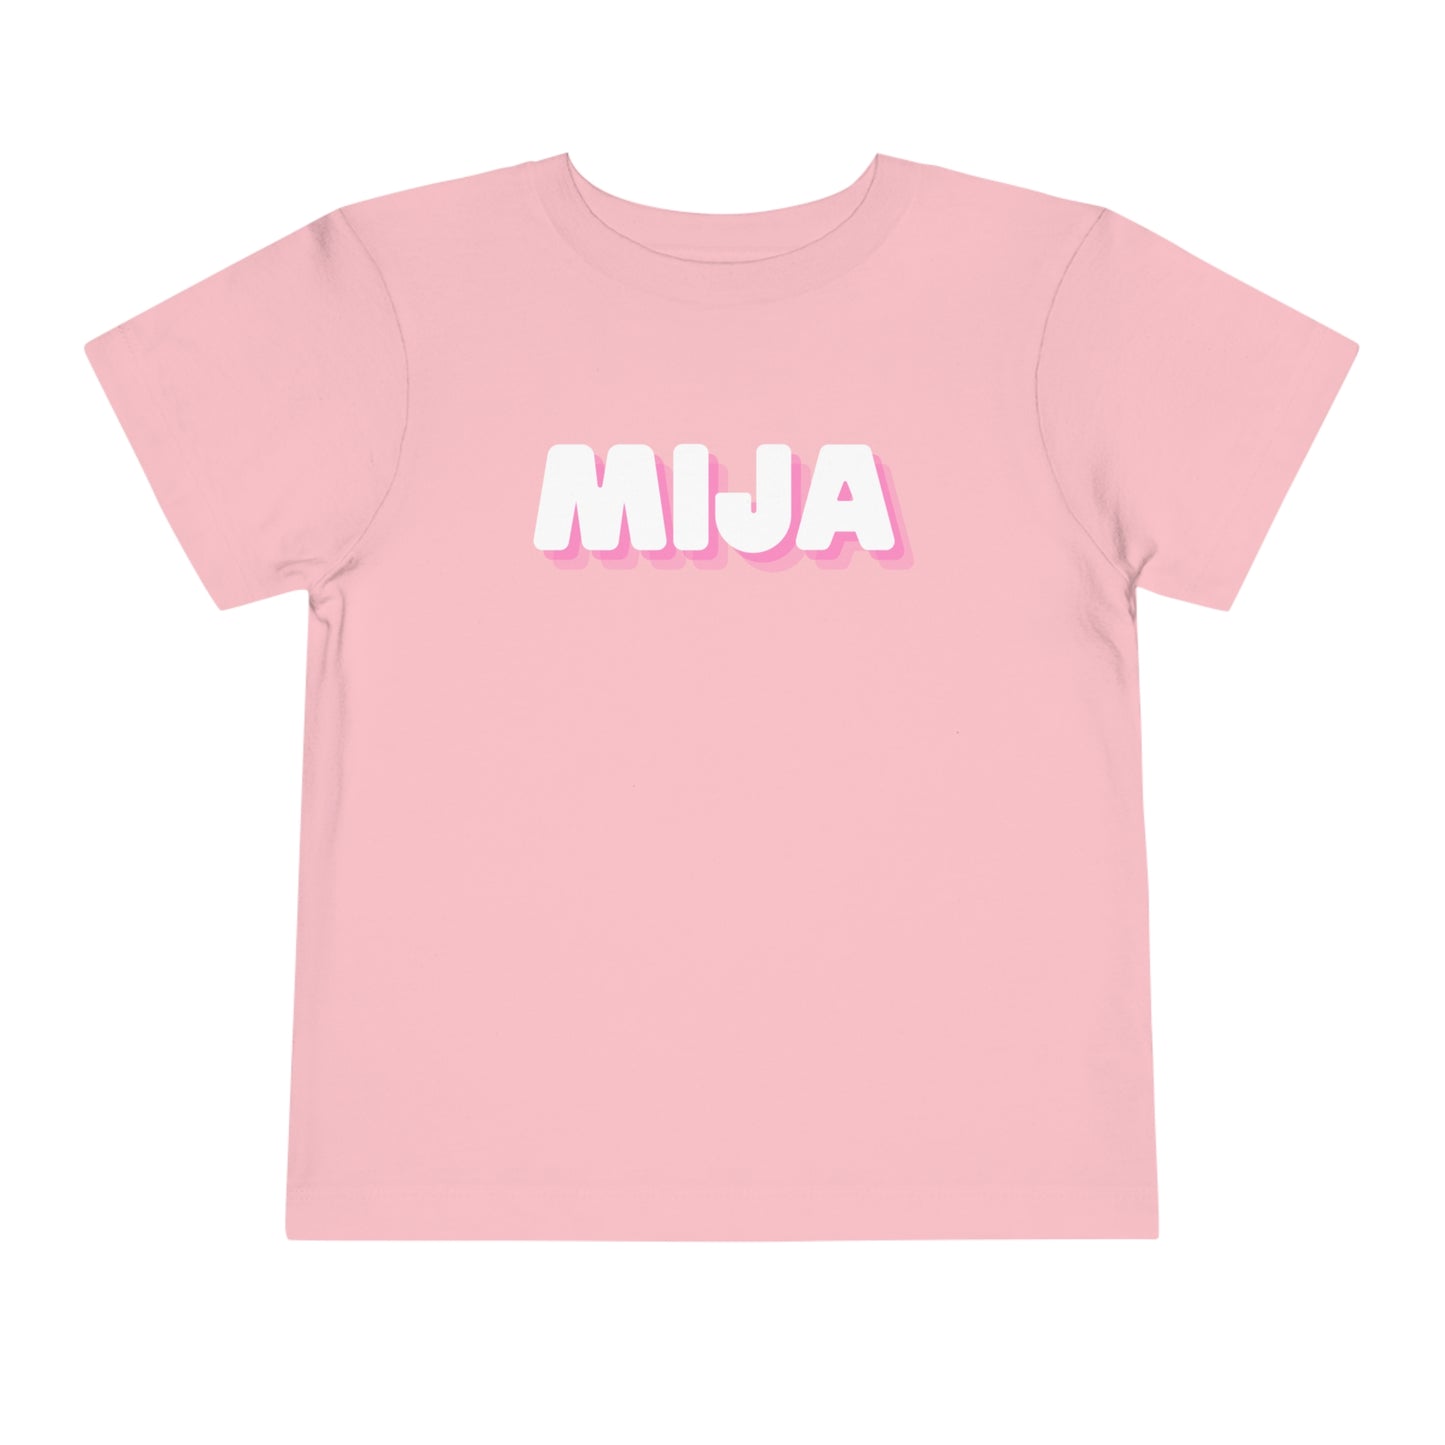 MIJA (daughter) Toddler Short Sleeve Tee